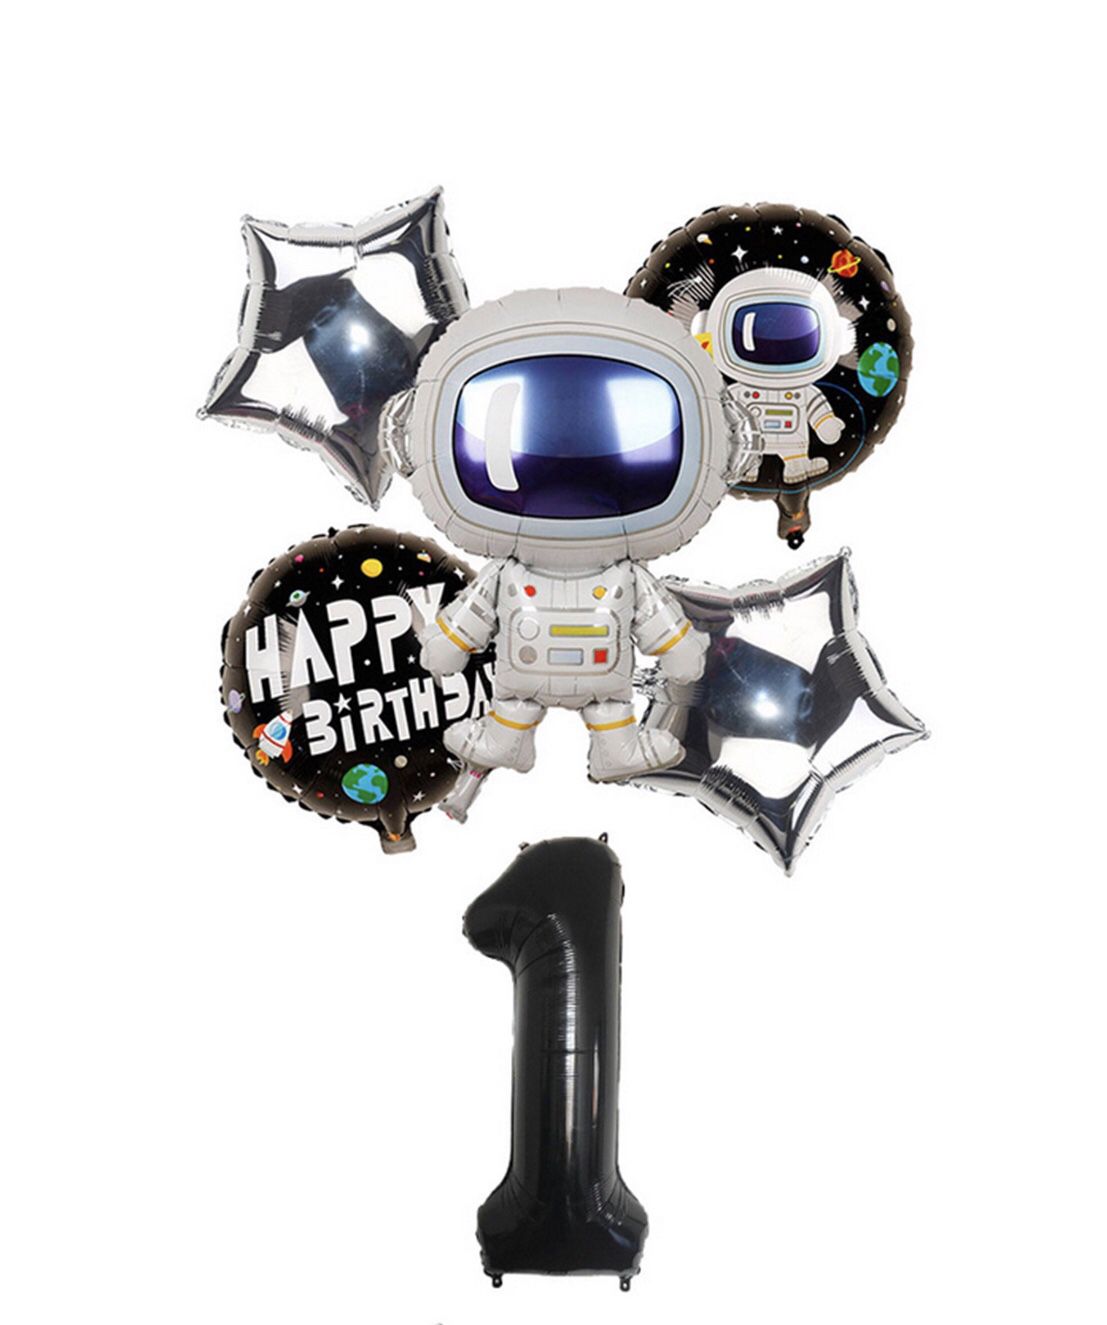 Astronaut Balloons, birthday decor / home decor / boy toys / kid stuff / balloons / party supplies / party rentals / space decor